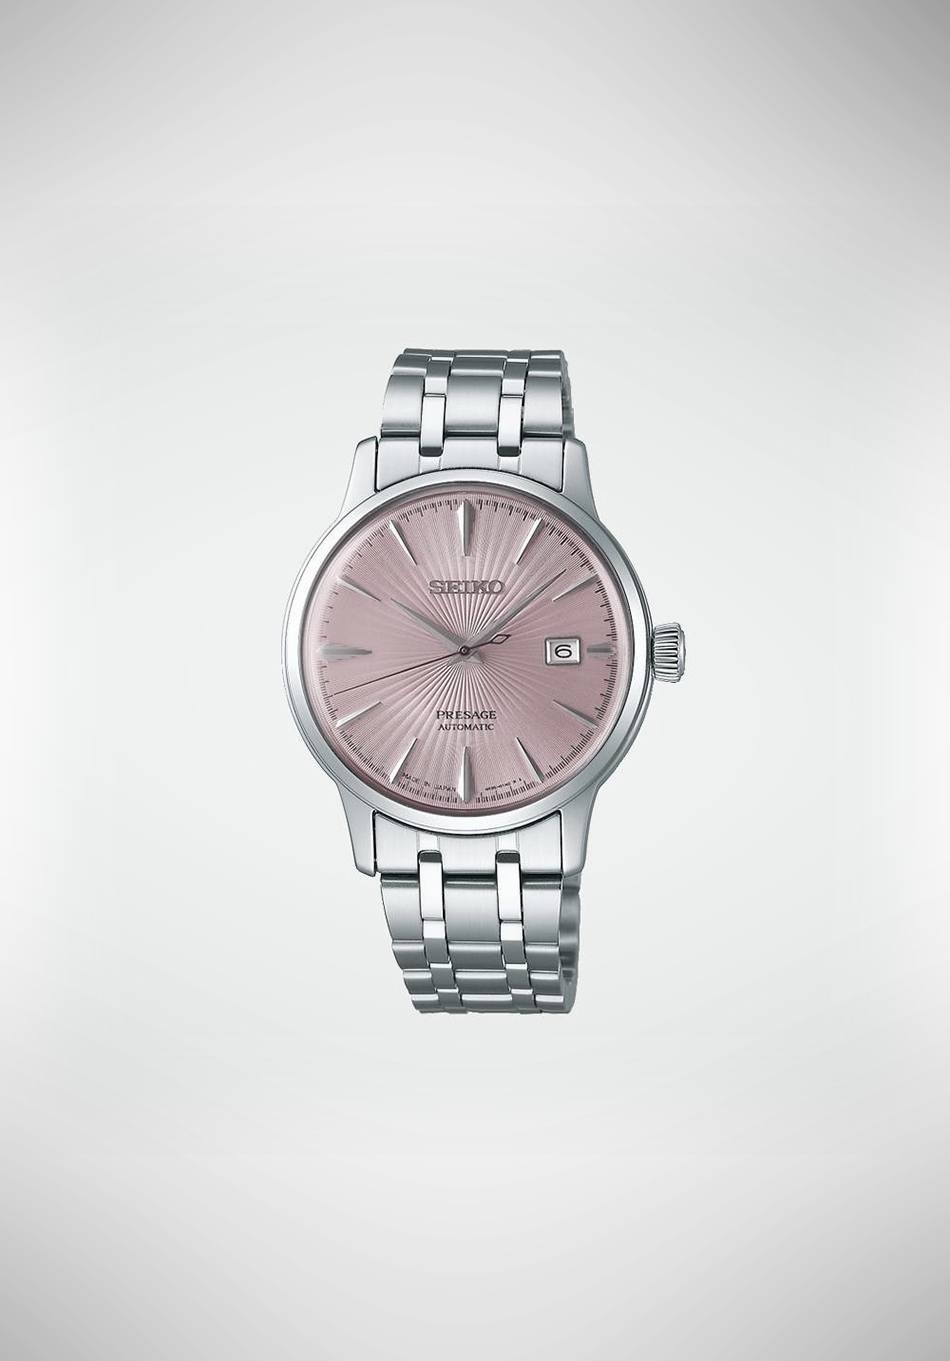 Louis Erard Heritage automatic watch 67278AA15.BMA05 - Gioielleria Loffredo